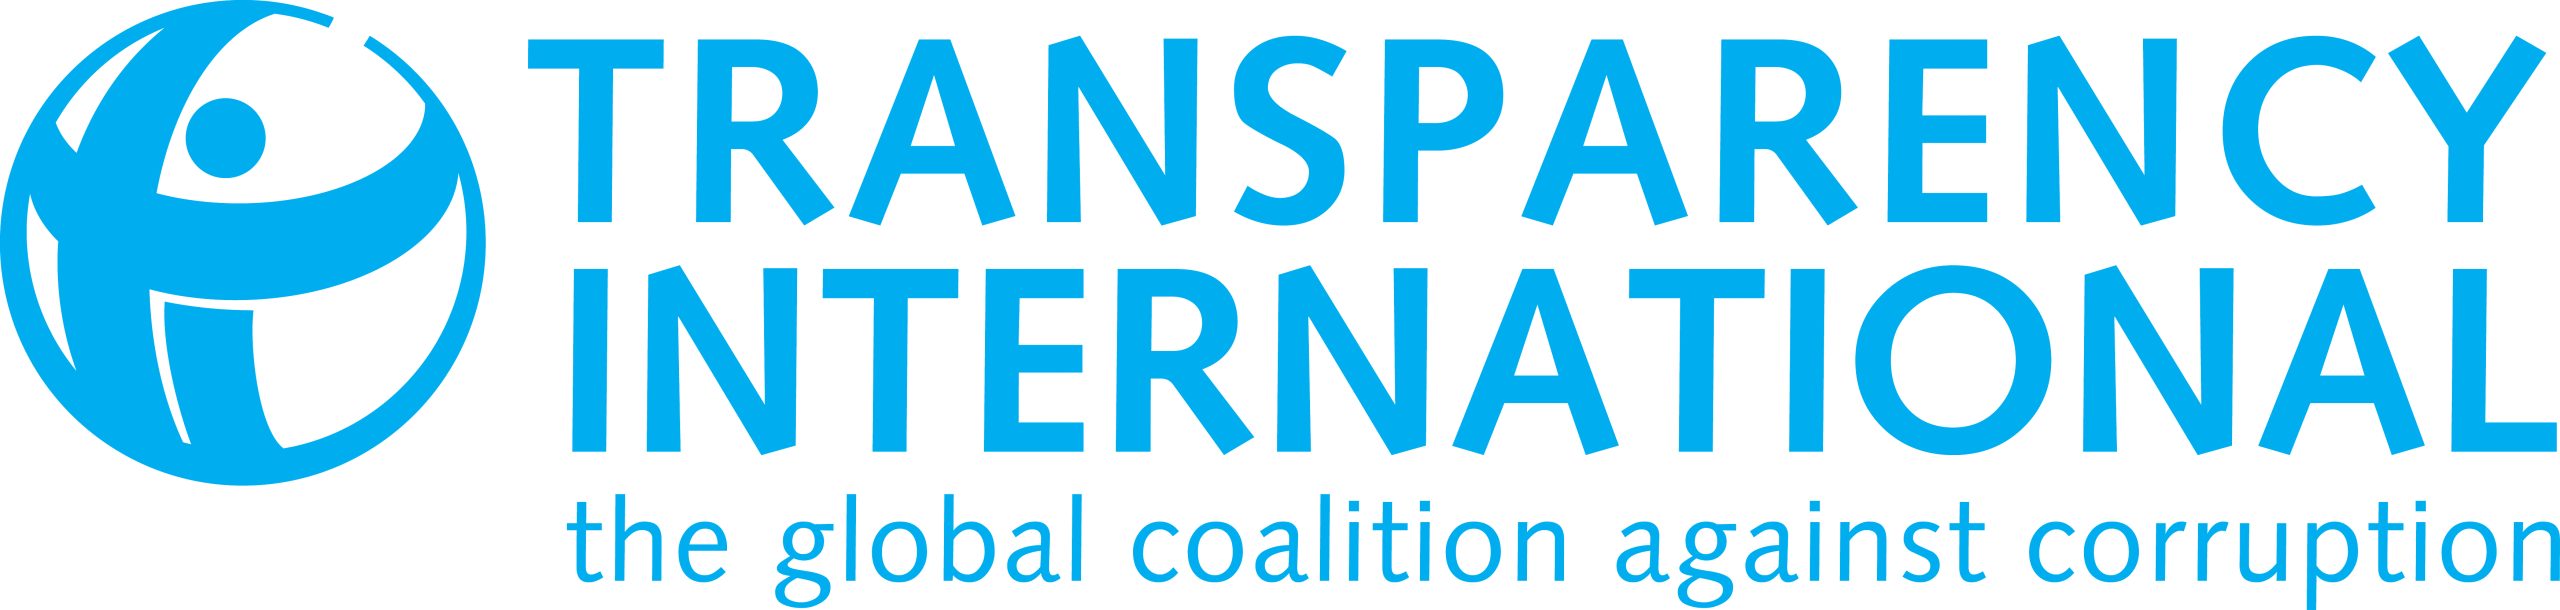 transparecia_internacional_transparency_international_logo_blue.jpg